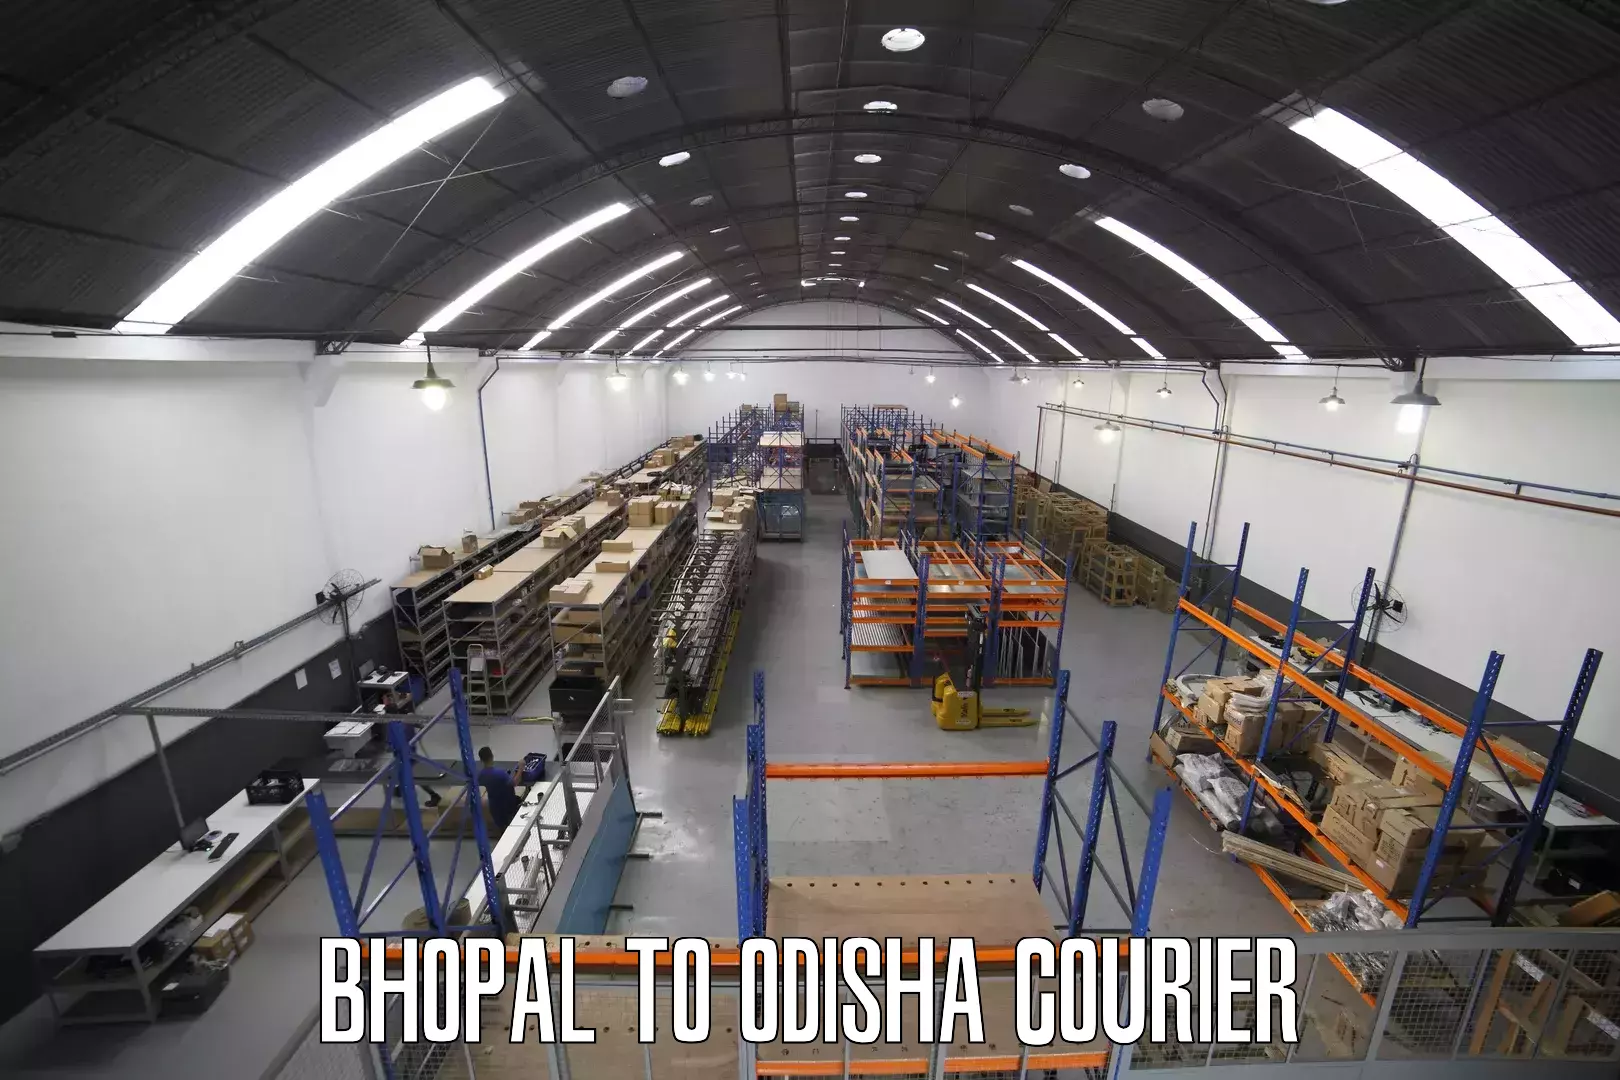 Tech-enabled shipping Bhopal to Dhamanagar